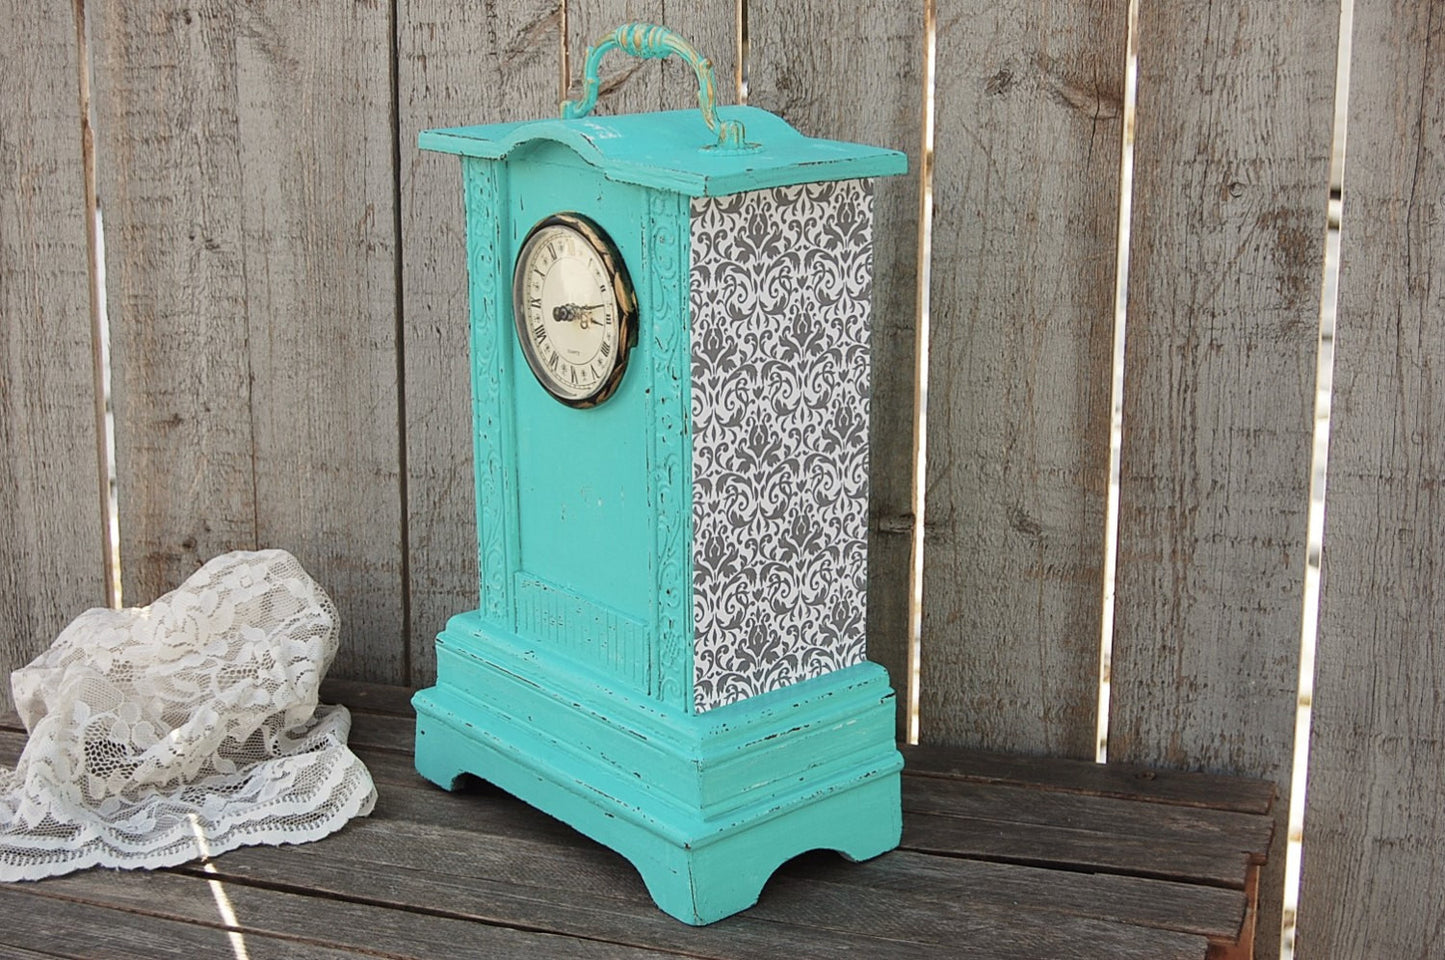 Aqua shabby chic clock - The Vintage Artistry